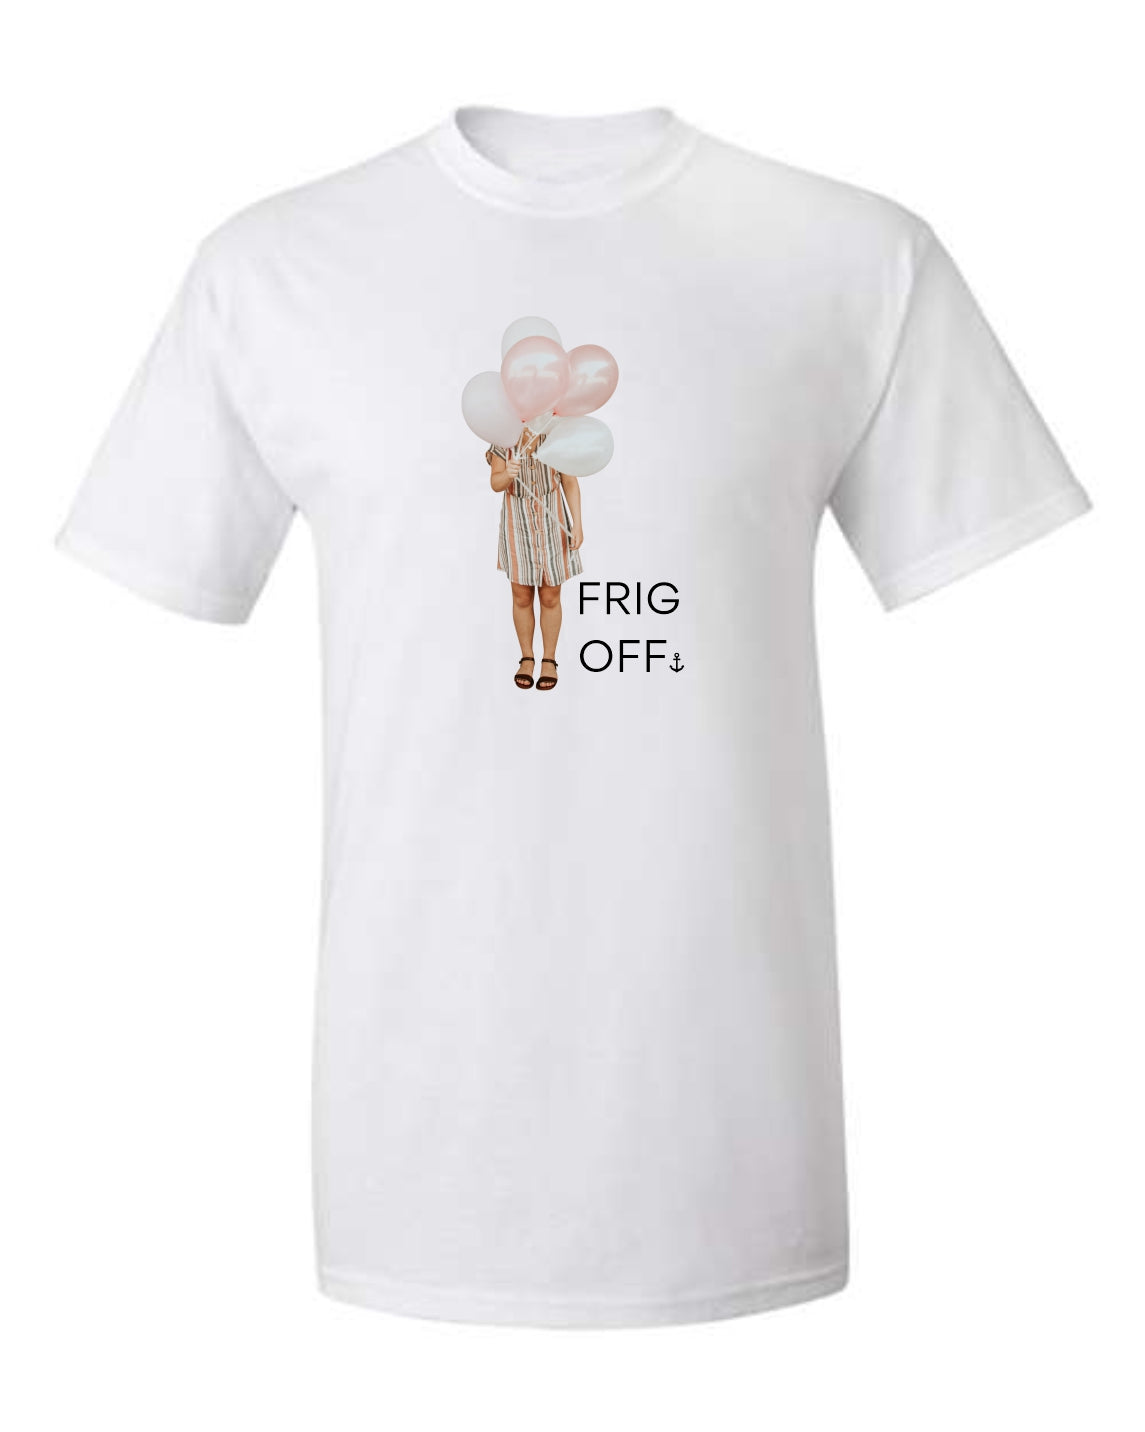 "Frig Off" Balloon Girl T-Shirt